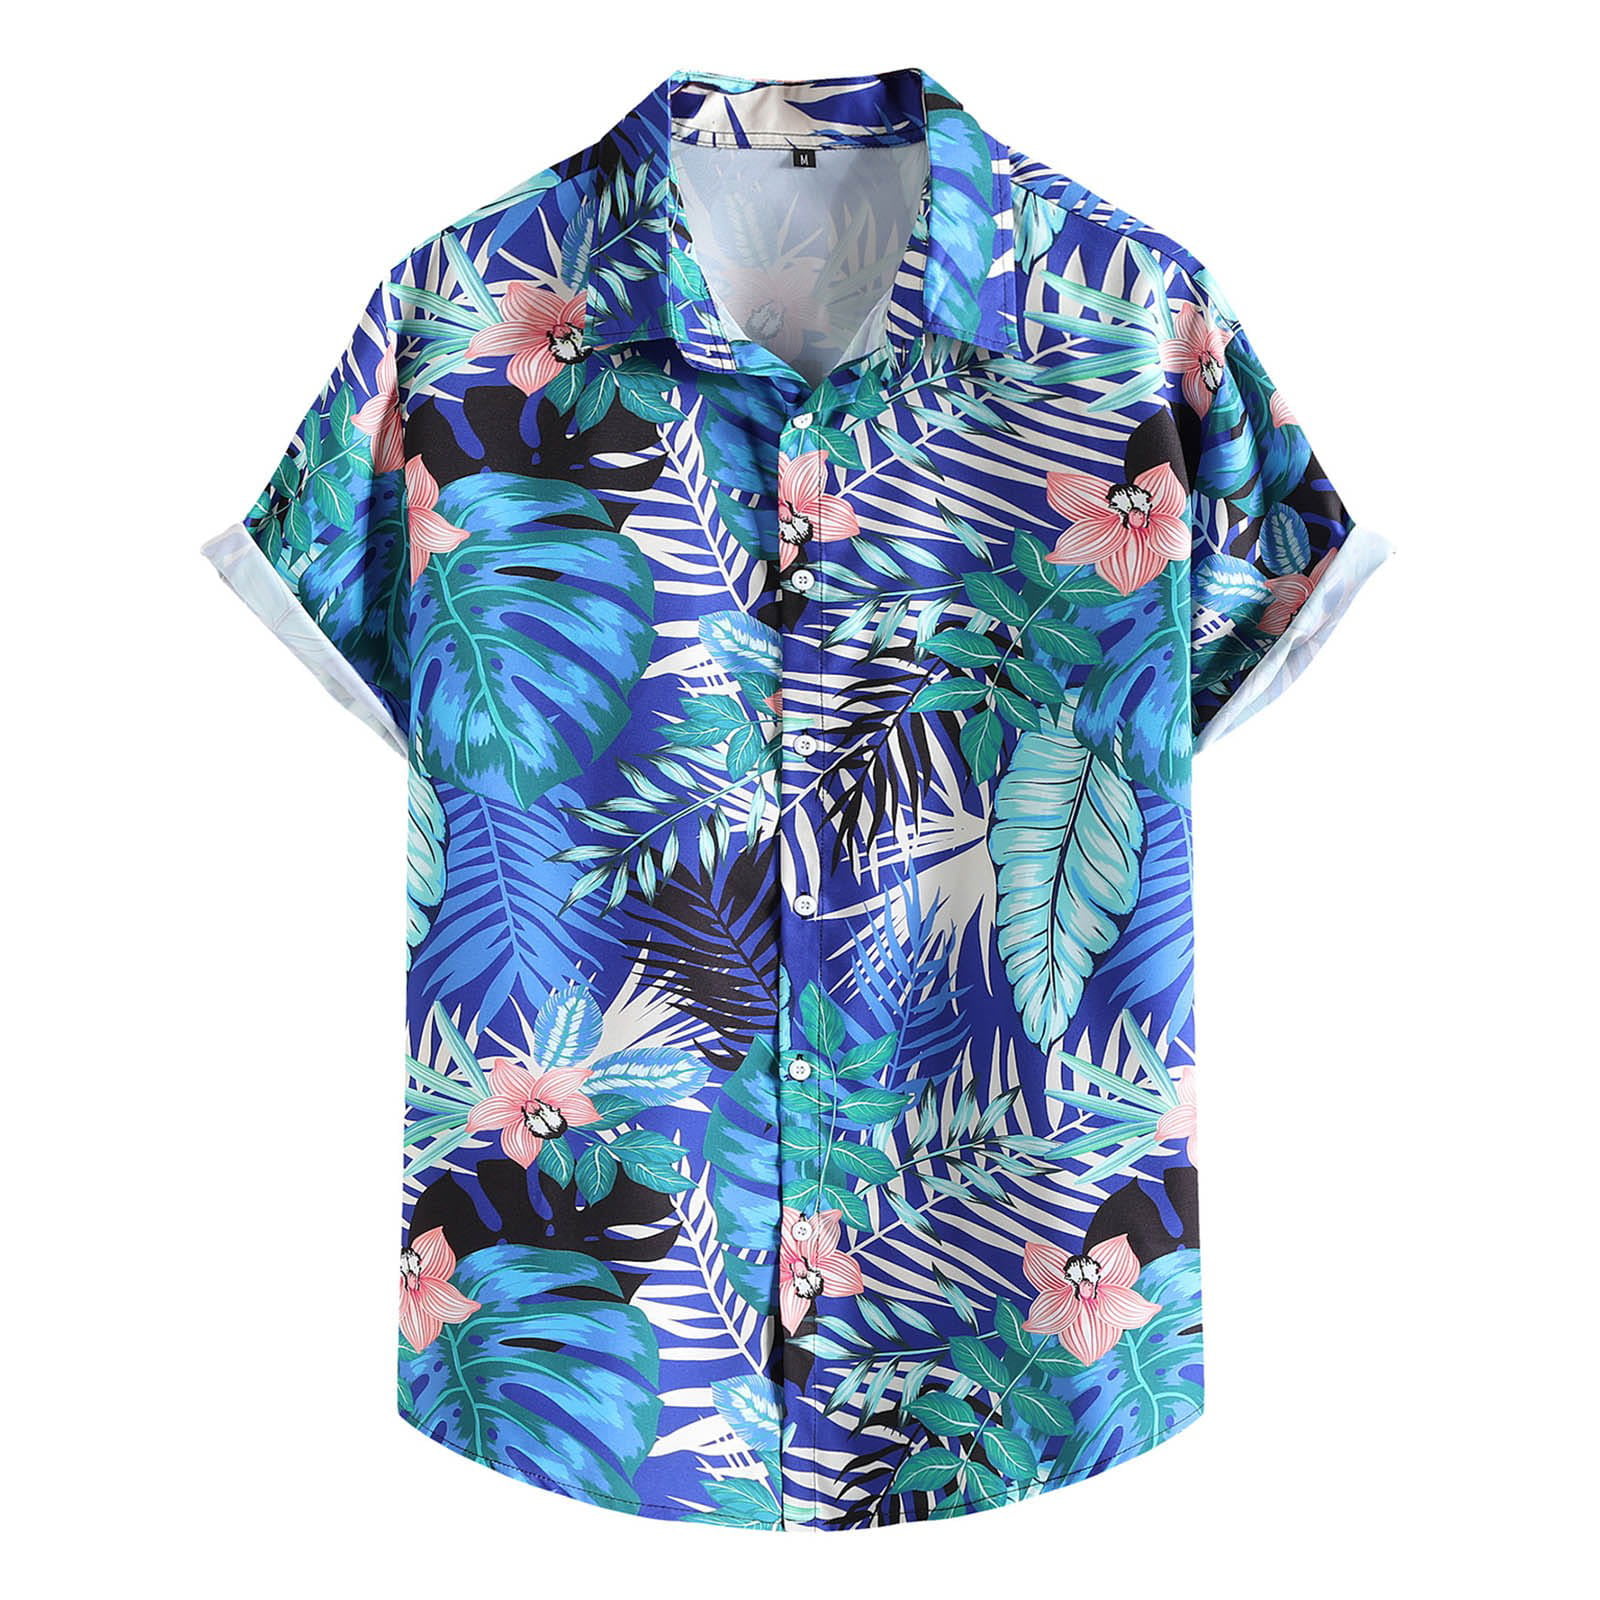 KAGAYD Men Fashion Spring Summer Casual Short Sleeve Turndown Neck  Camouflage Printed T Shirts Top Blouse 